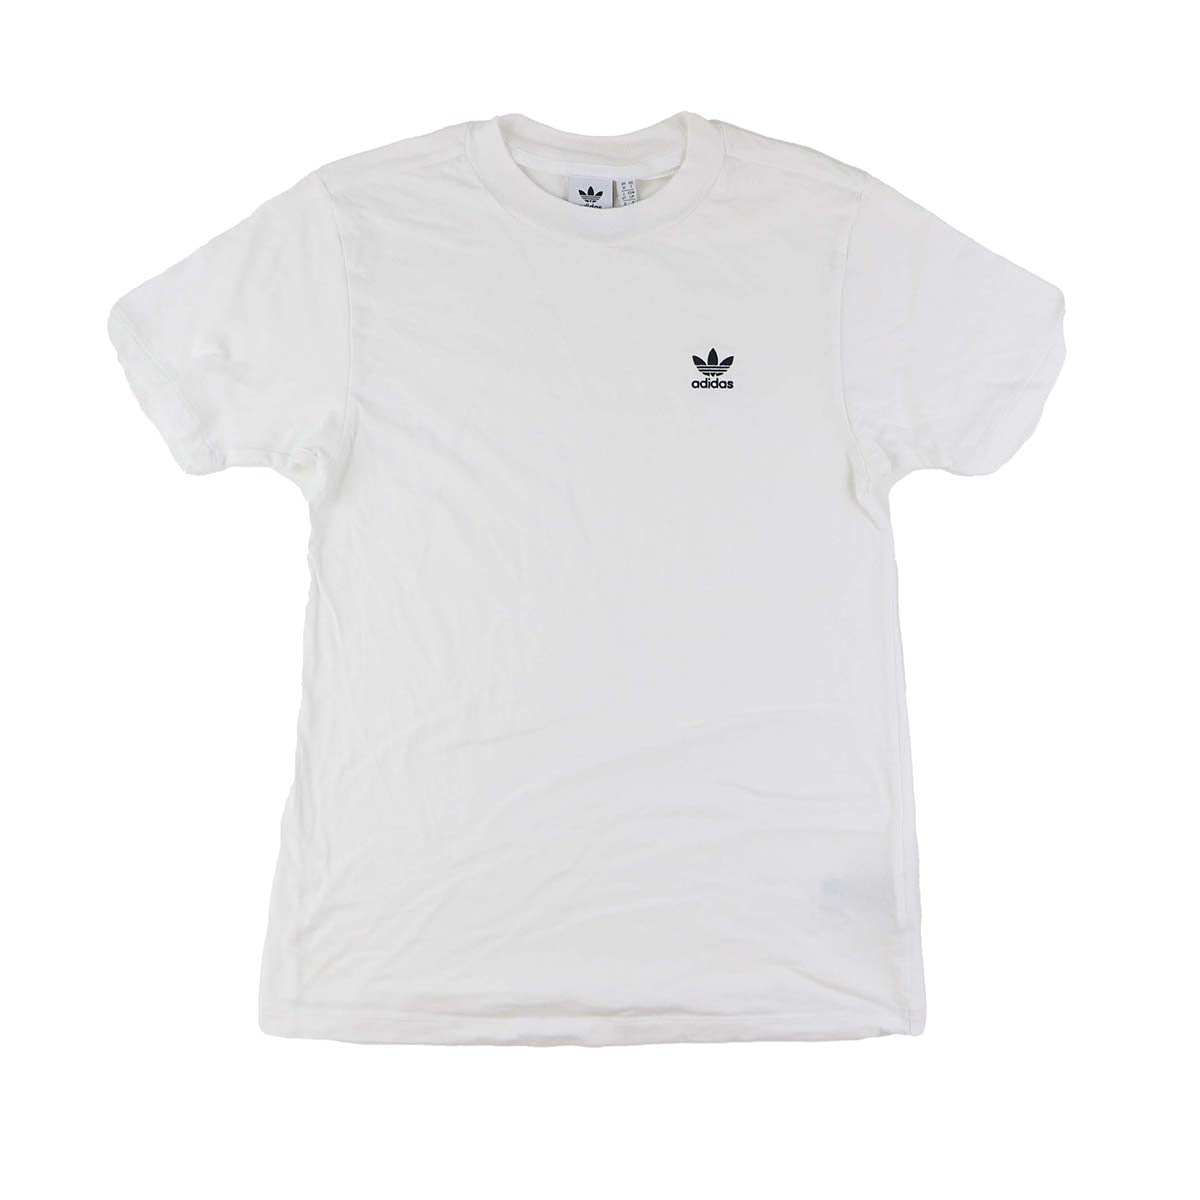 Adidas T-shirt (S)